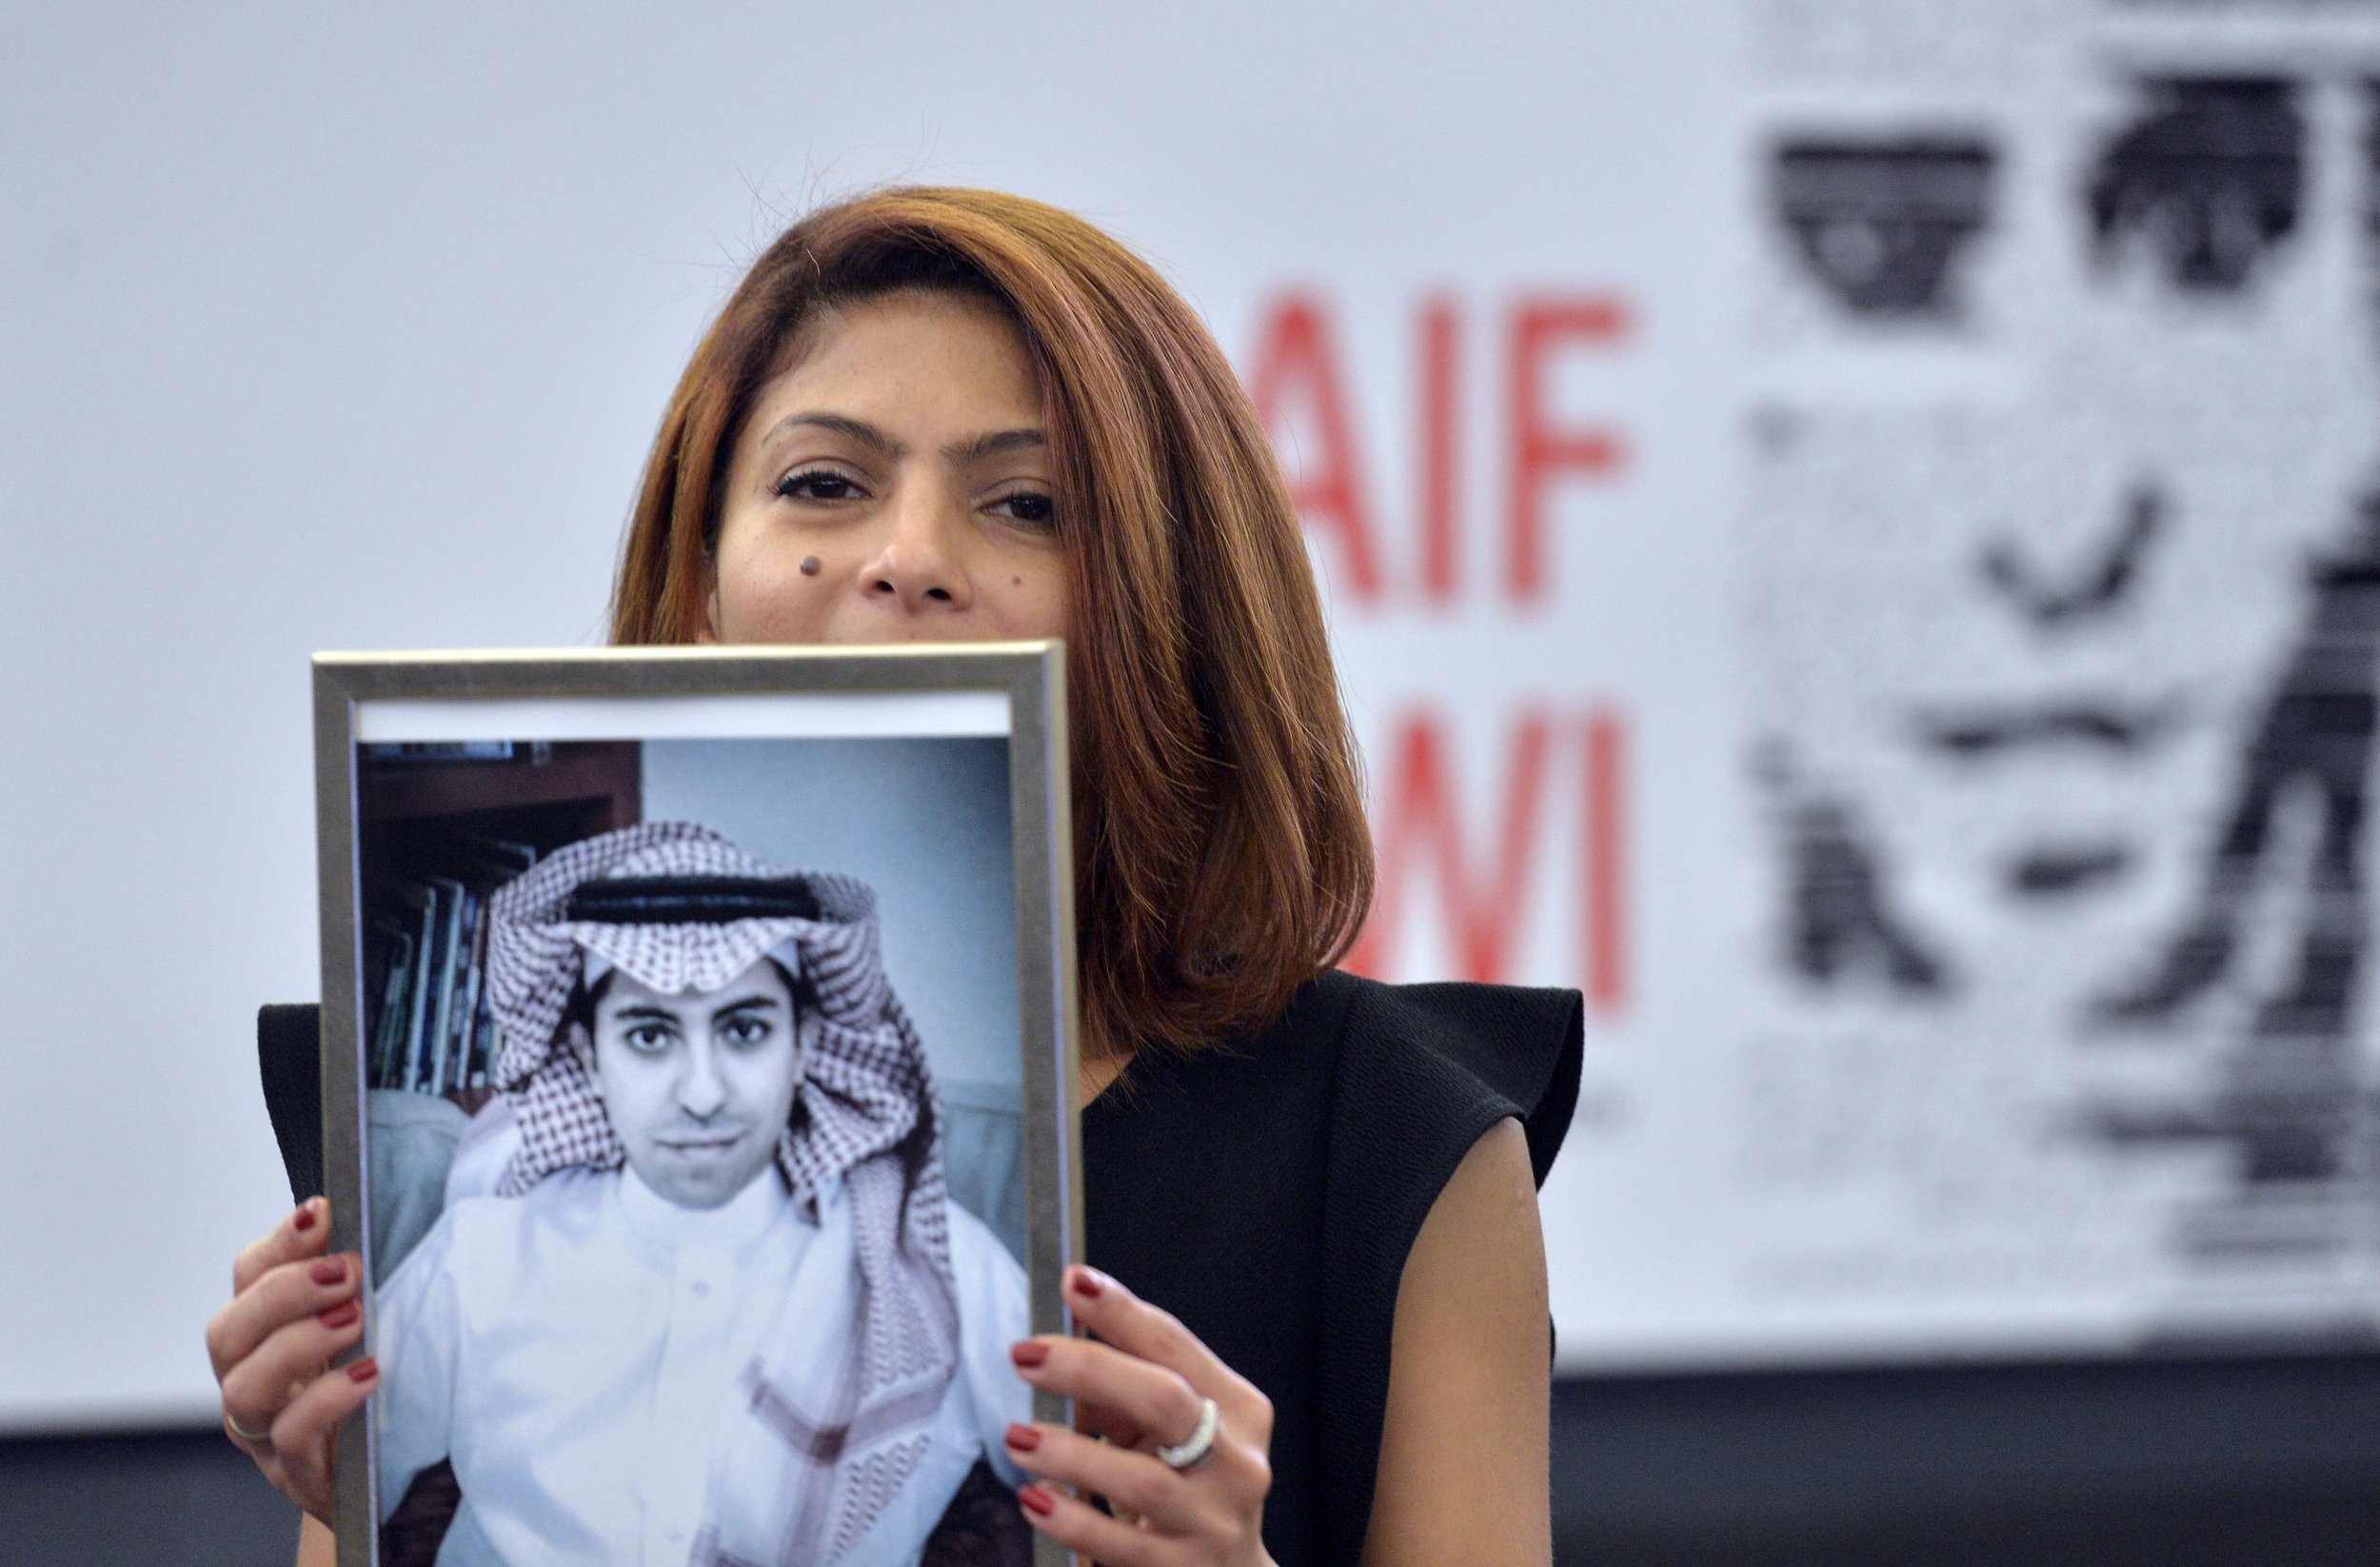 Raif Badawi's wife Ensaf